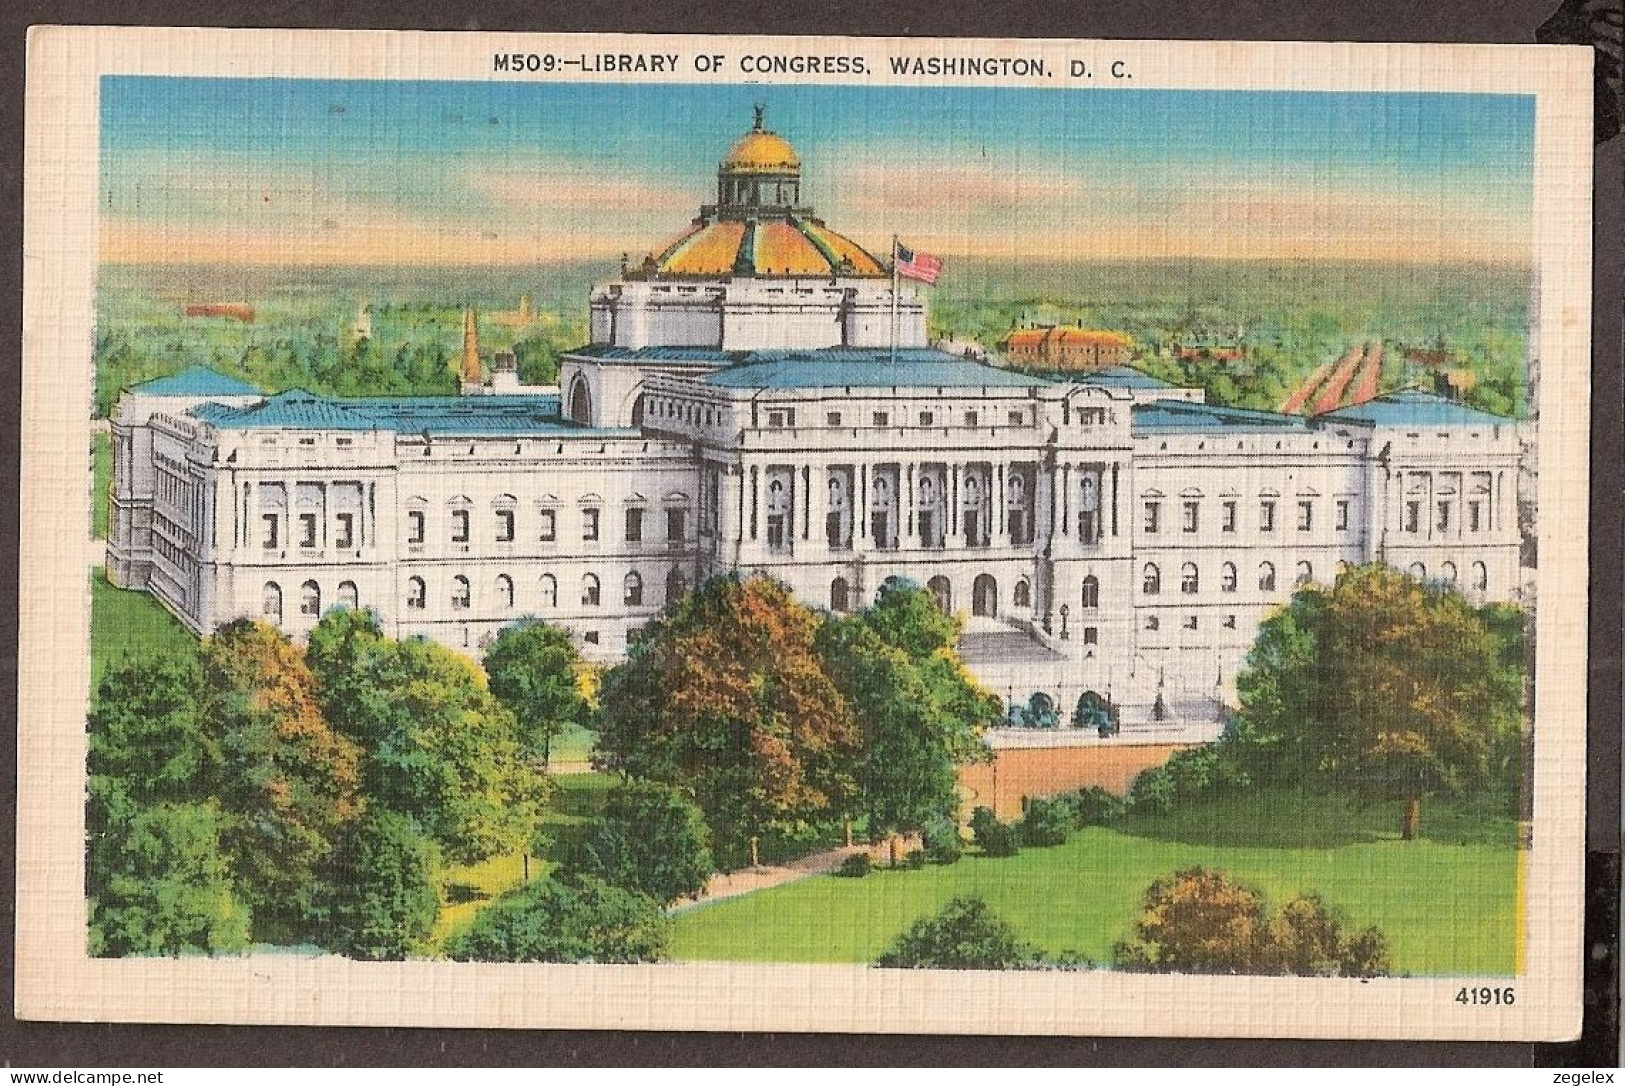 Library Of Congress, Washington D.C. 1951 - Washington DC